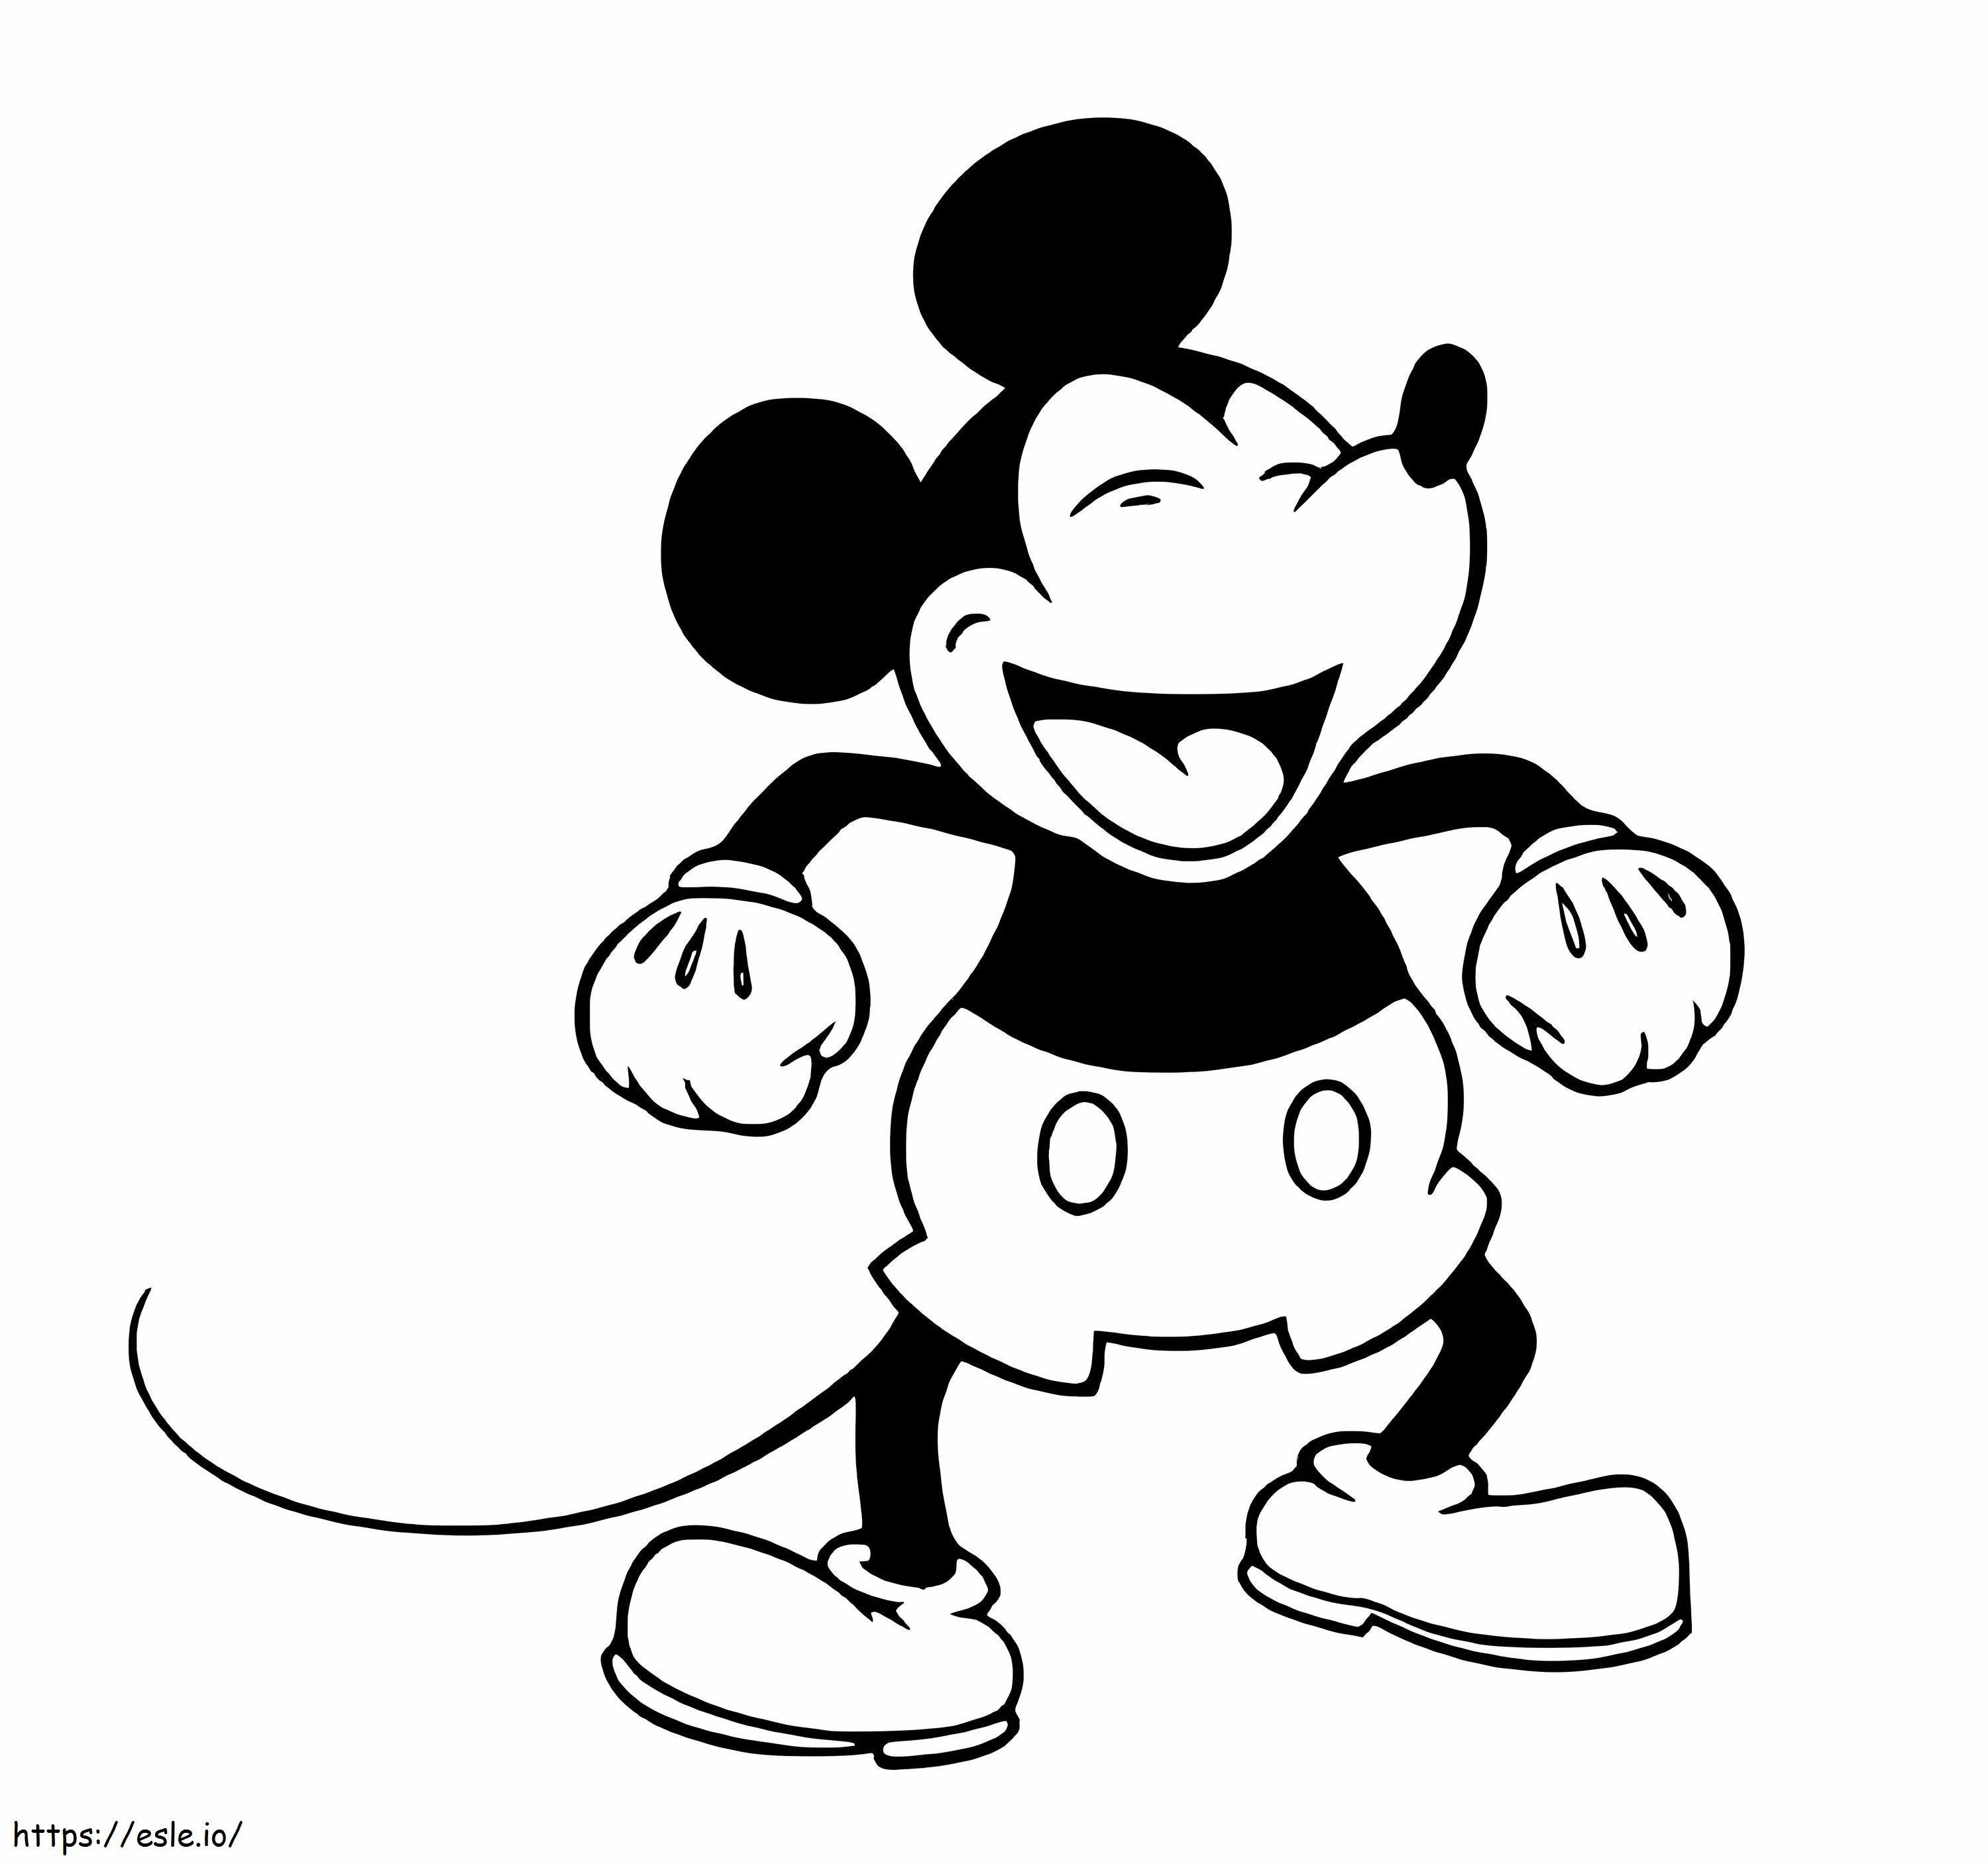 Mickey Mouse riendo para colorear